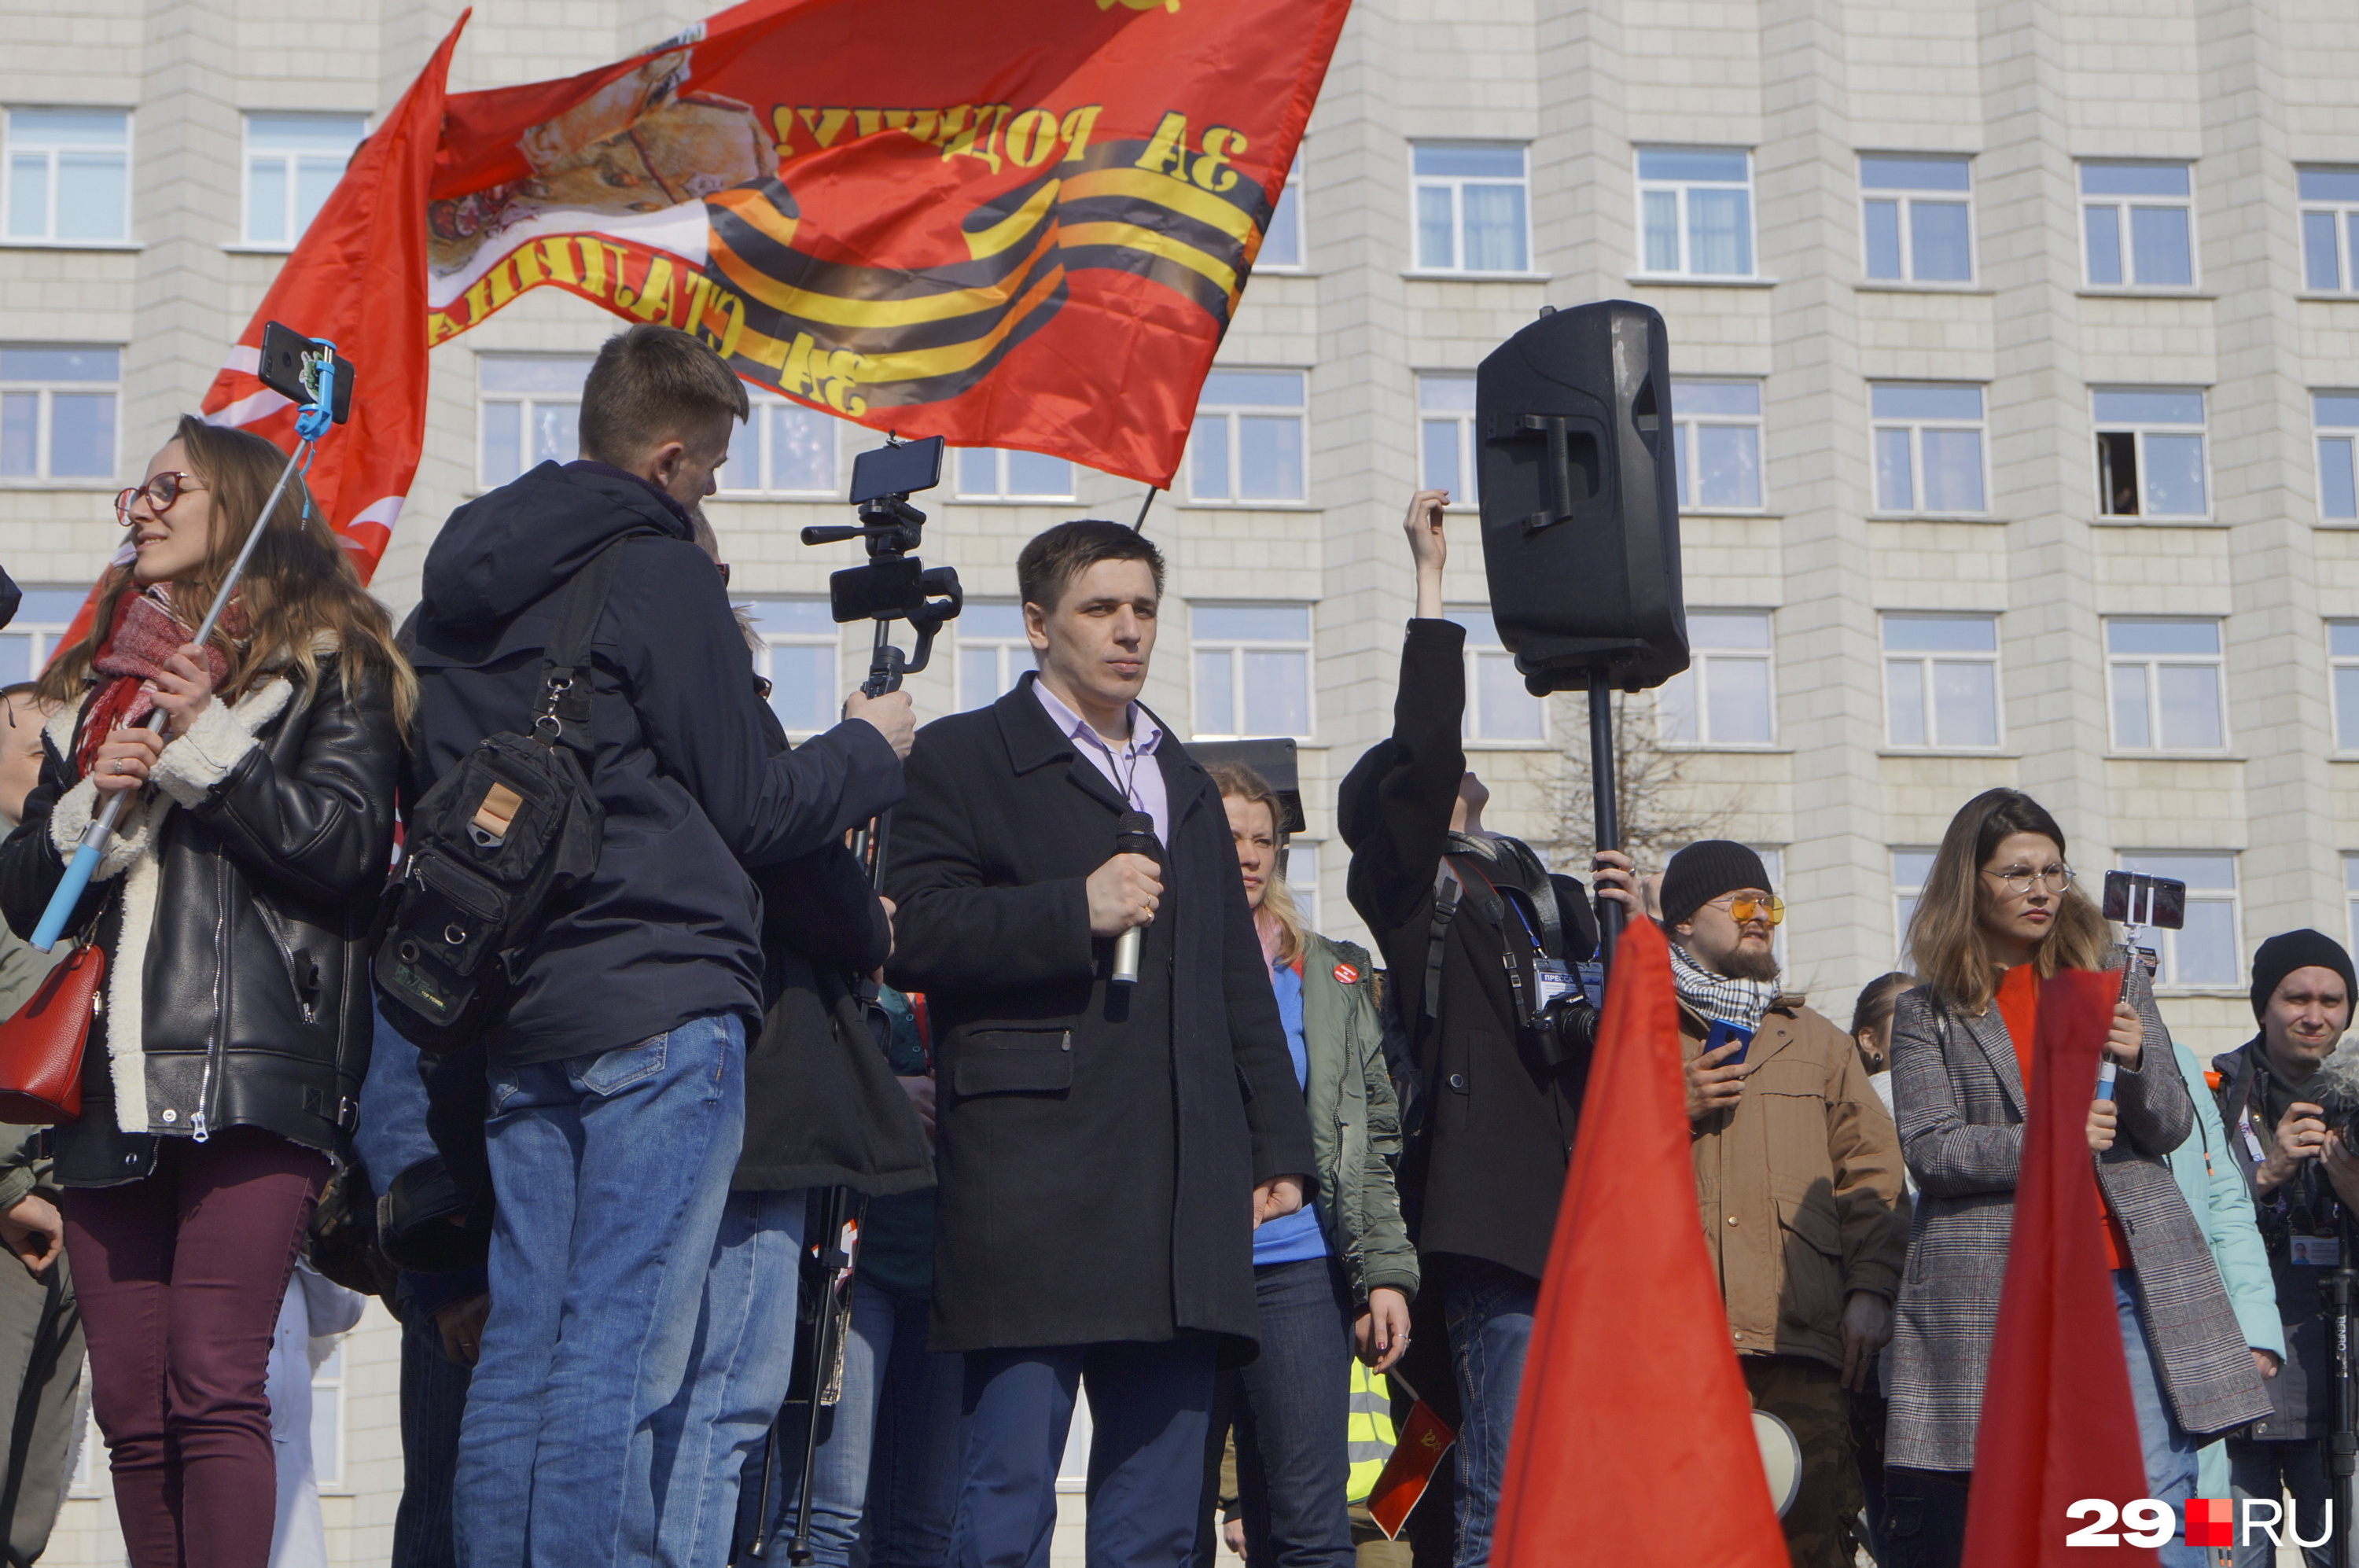 Дело завели на активиста Андрея Боровикова, постоянного оратора на протестных митингах